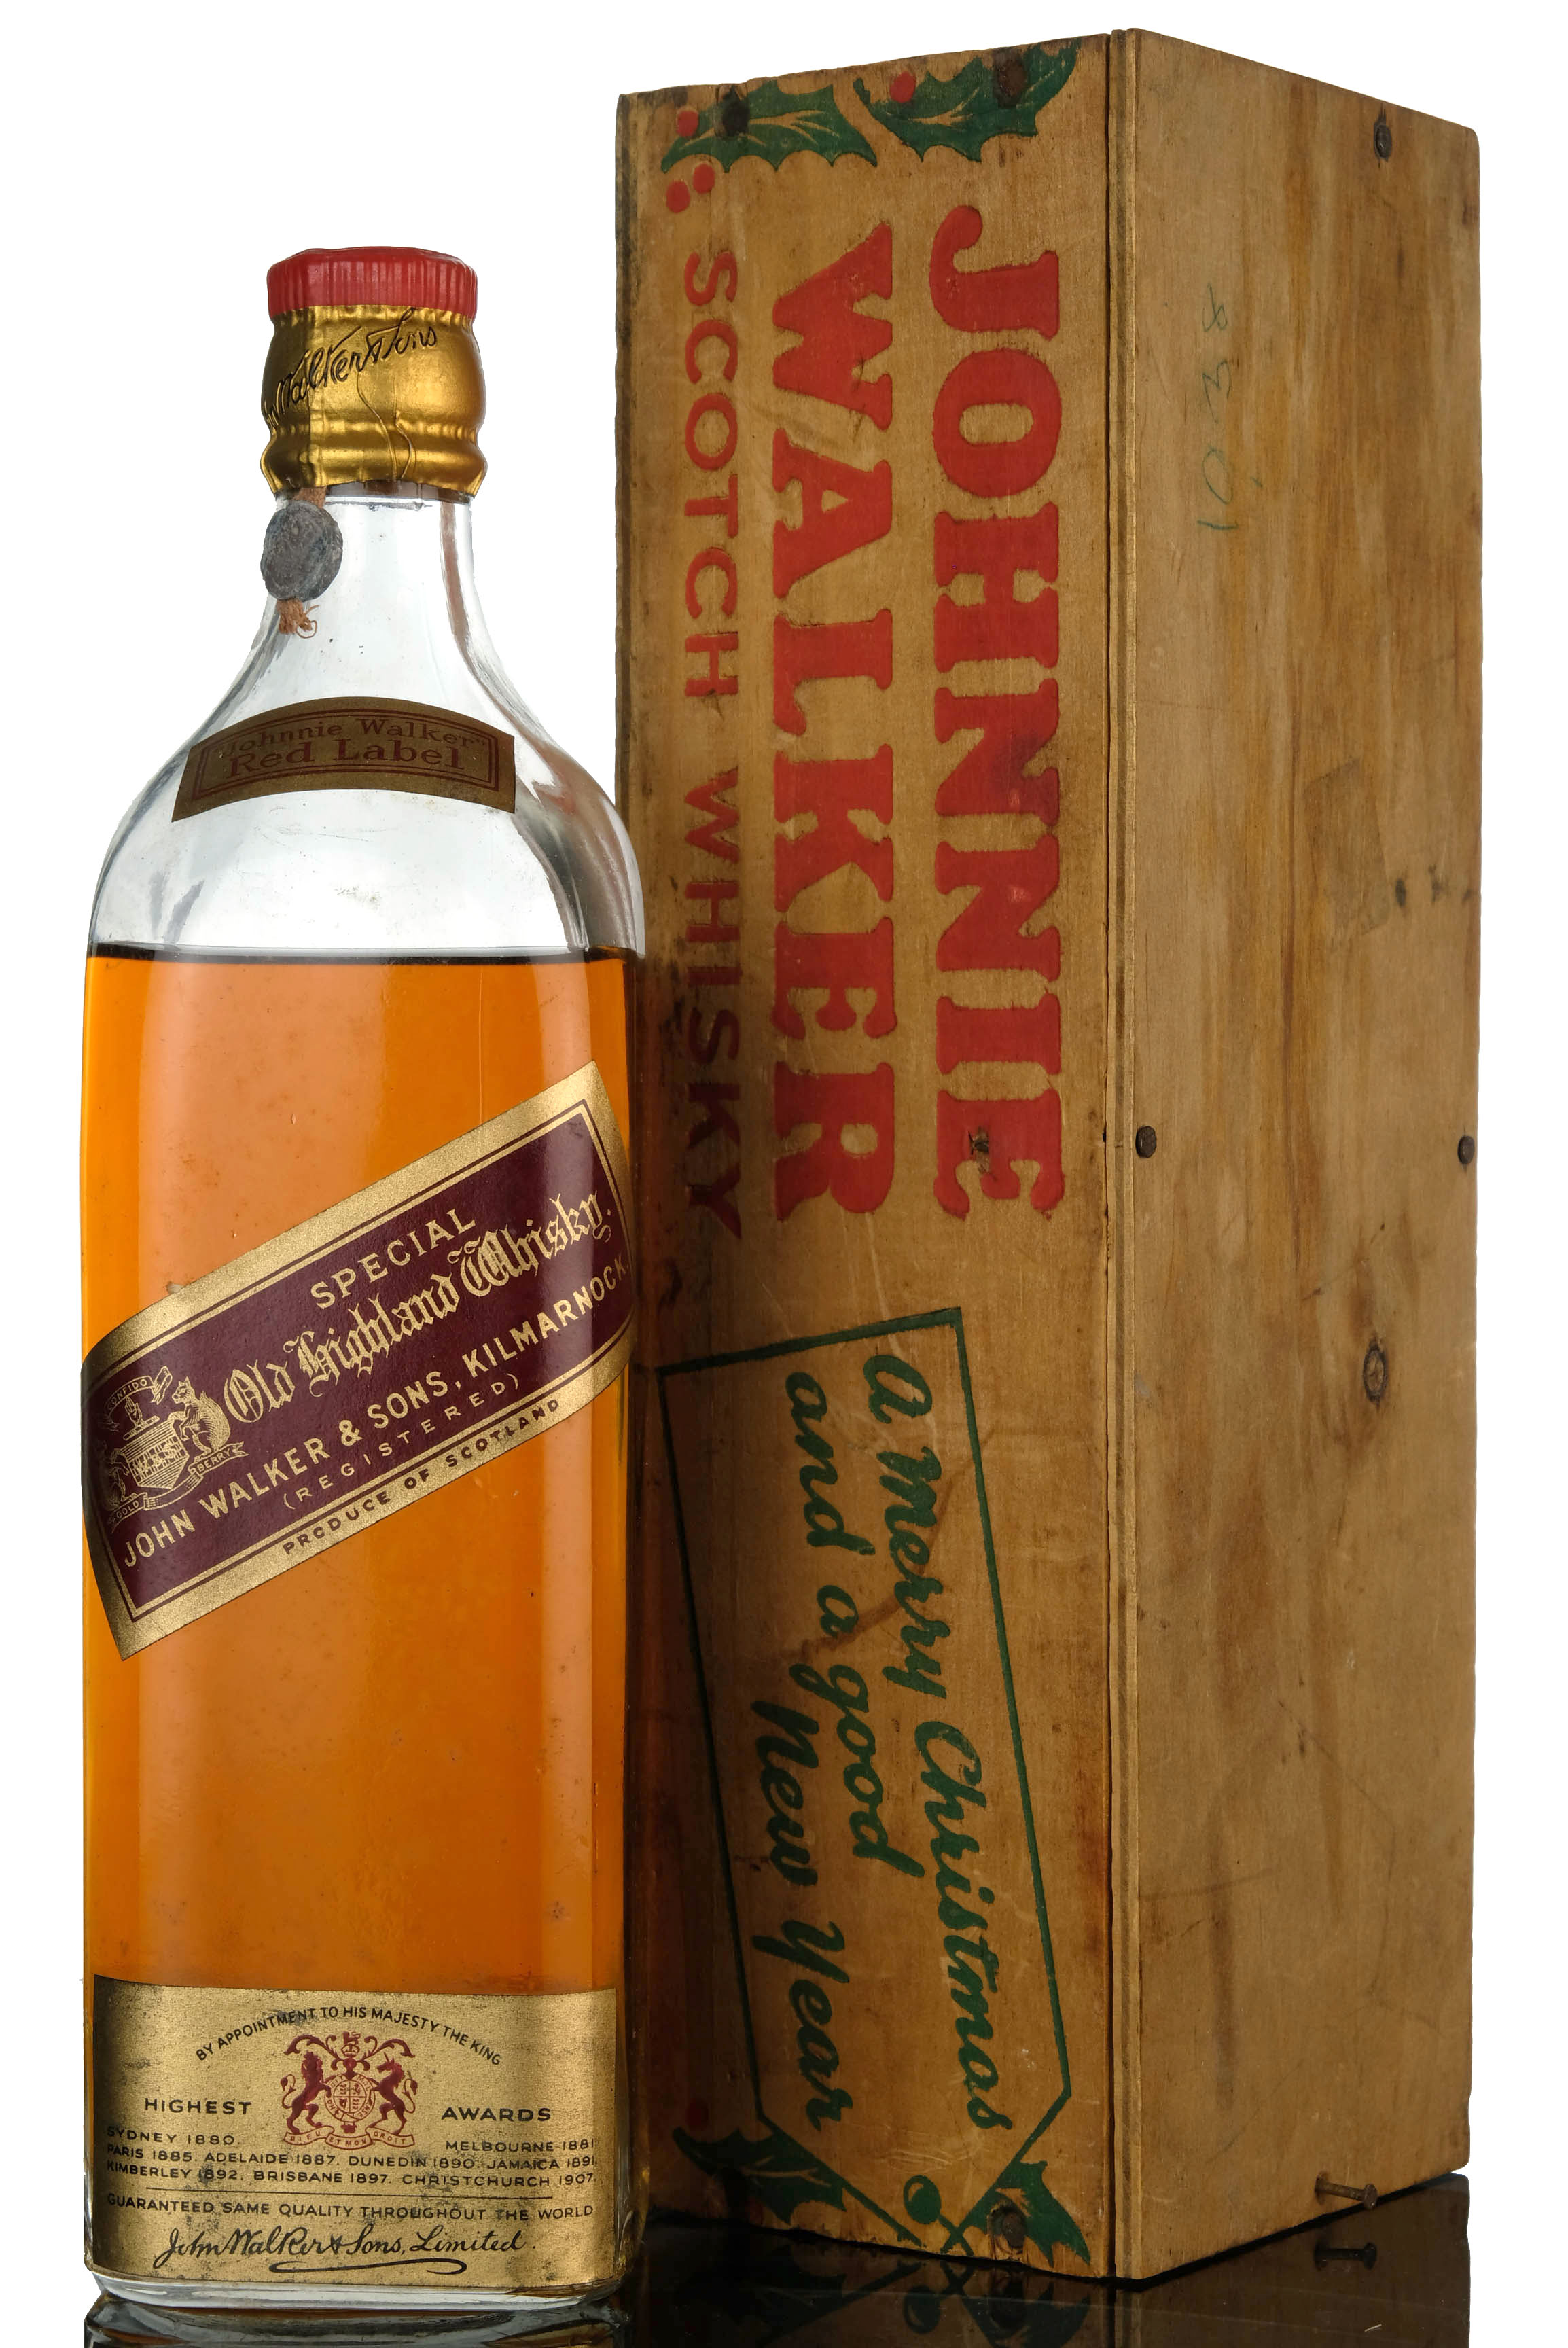 Johnnie Walker Red Label - Special Old Highland Whisky - 1930s